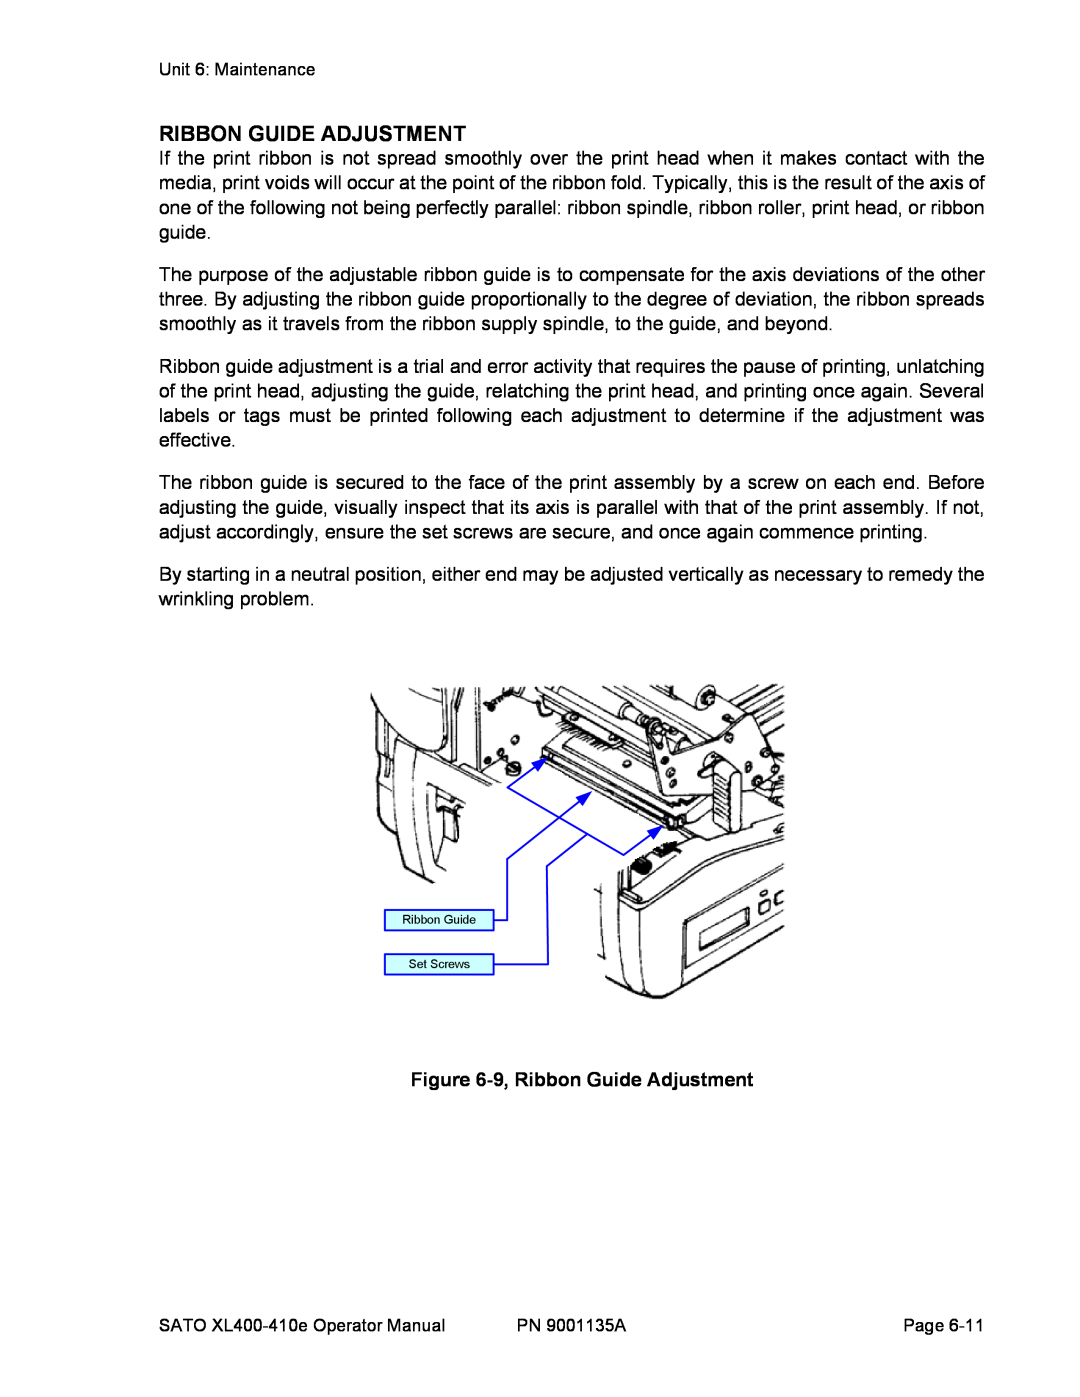 SATO 400e, 410e manual 9, Ribbon Guide Adjustment 